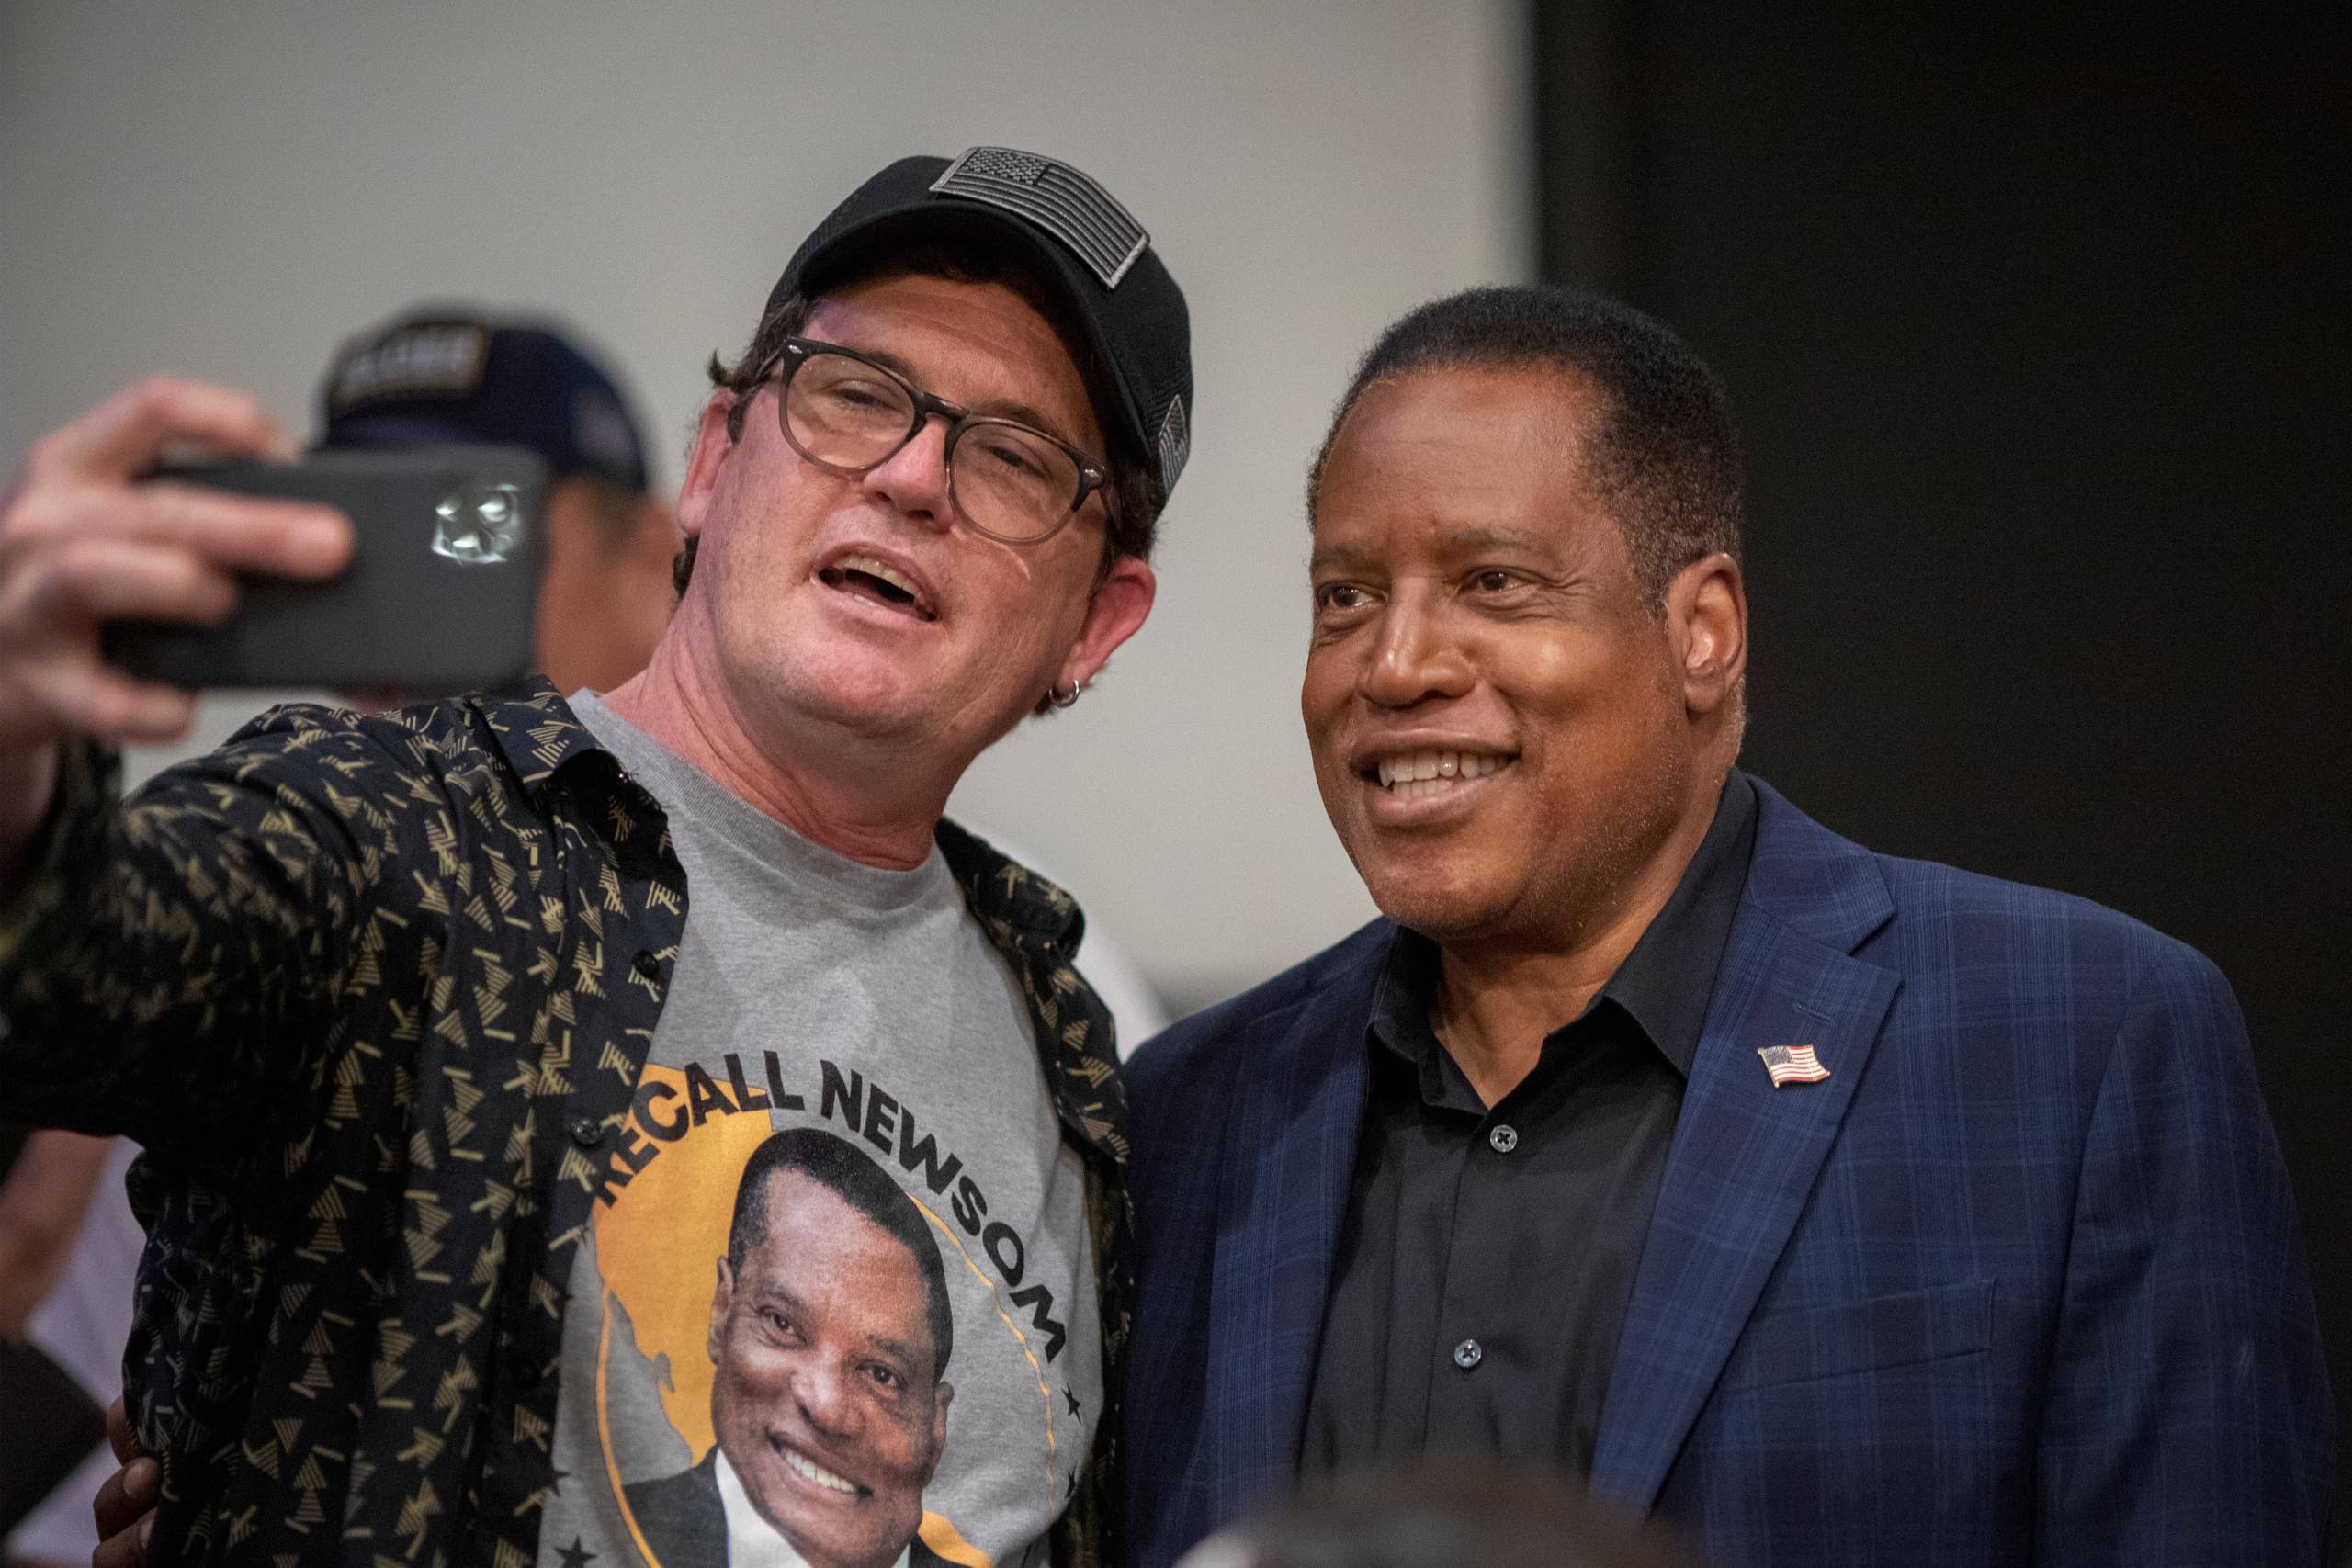 A man wearing a "Recall Newsom" T-shirt takes a selfie with Larry Elder.